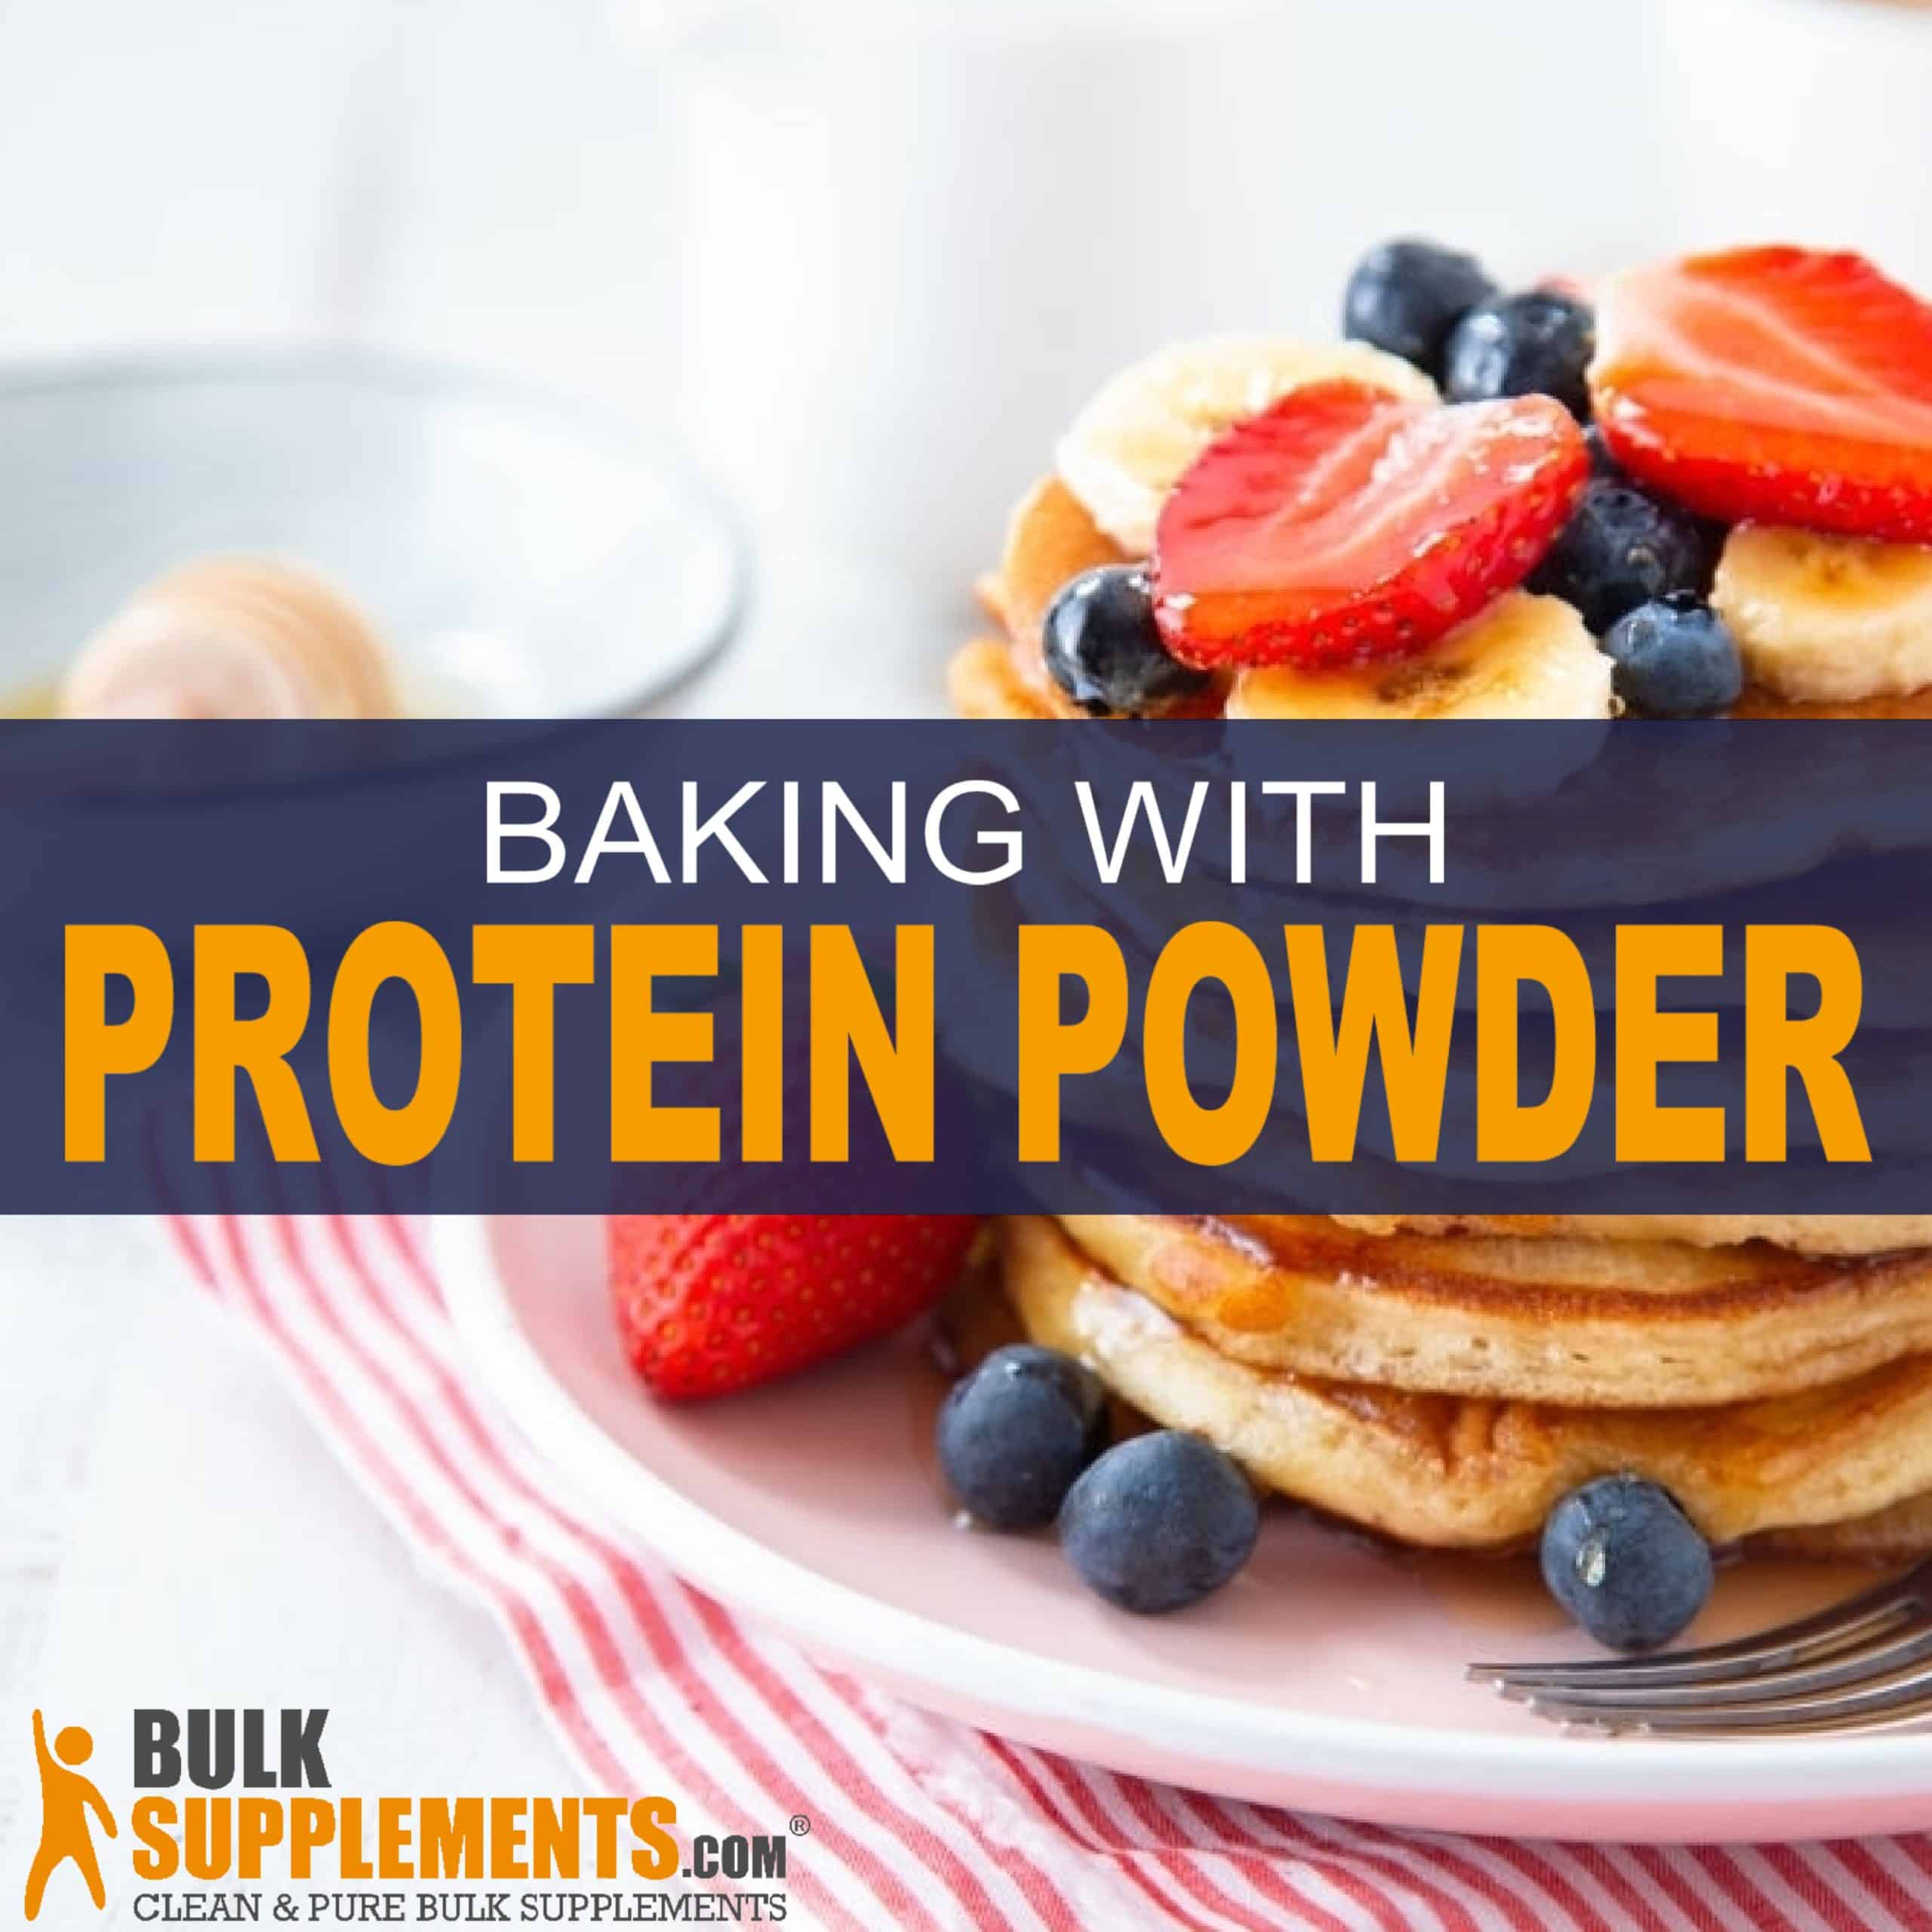 Baking with protein powder